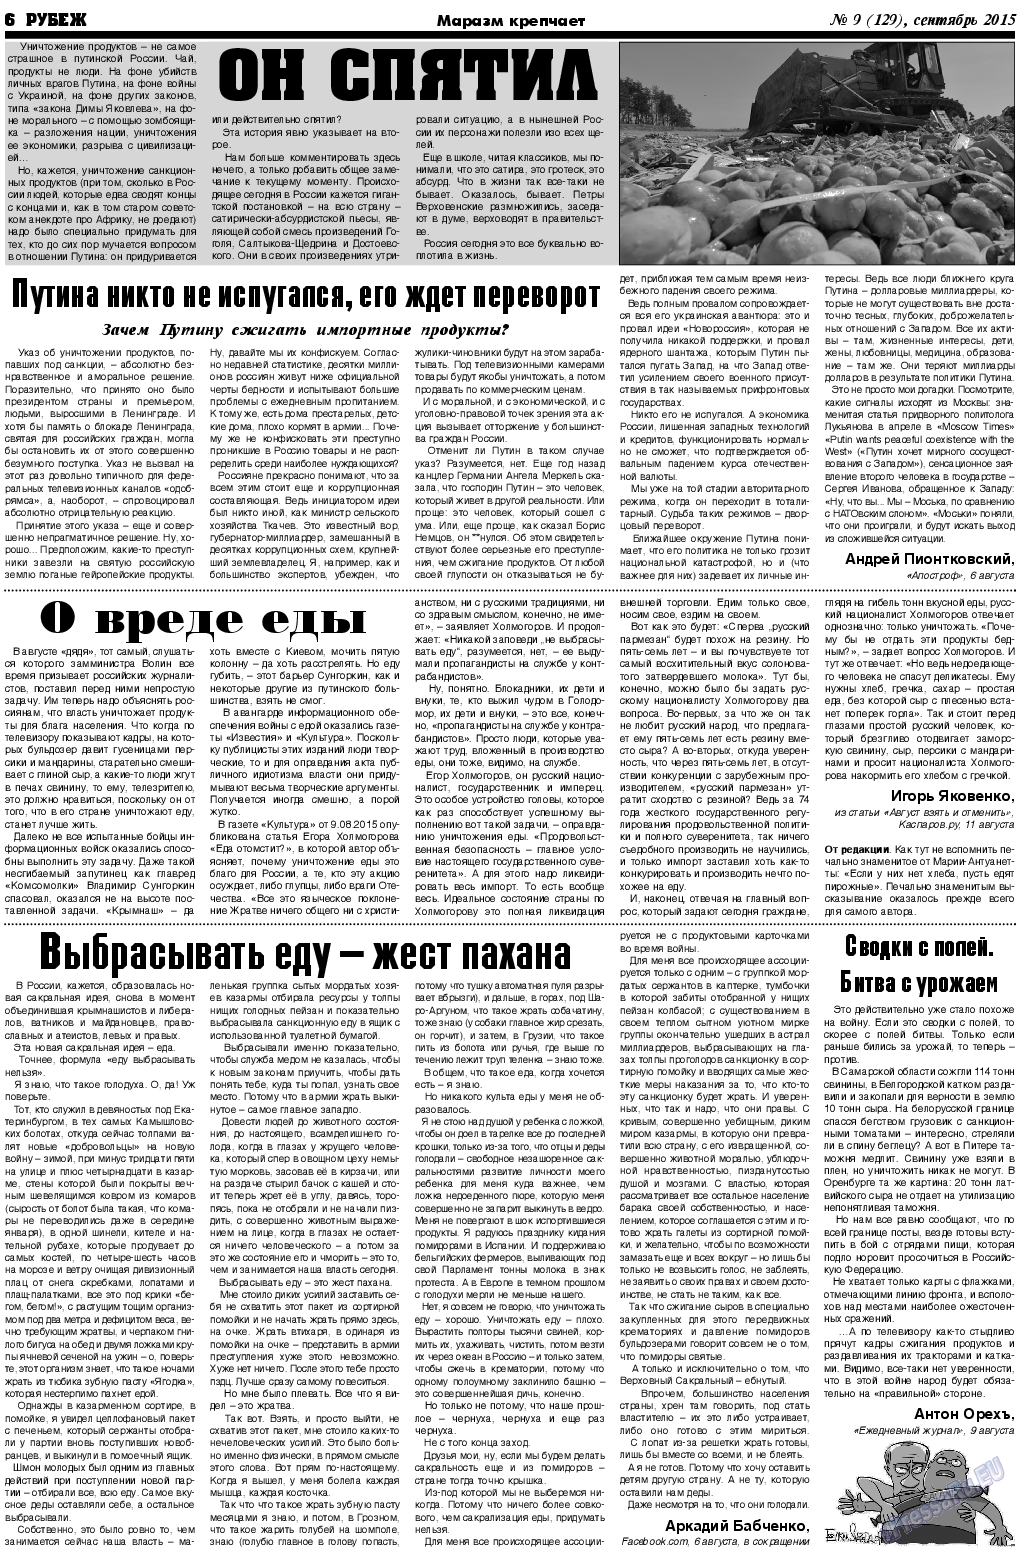 Рубеж, газета. 2015 №9 стр.6